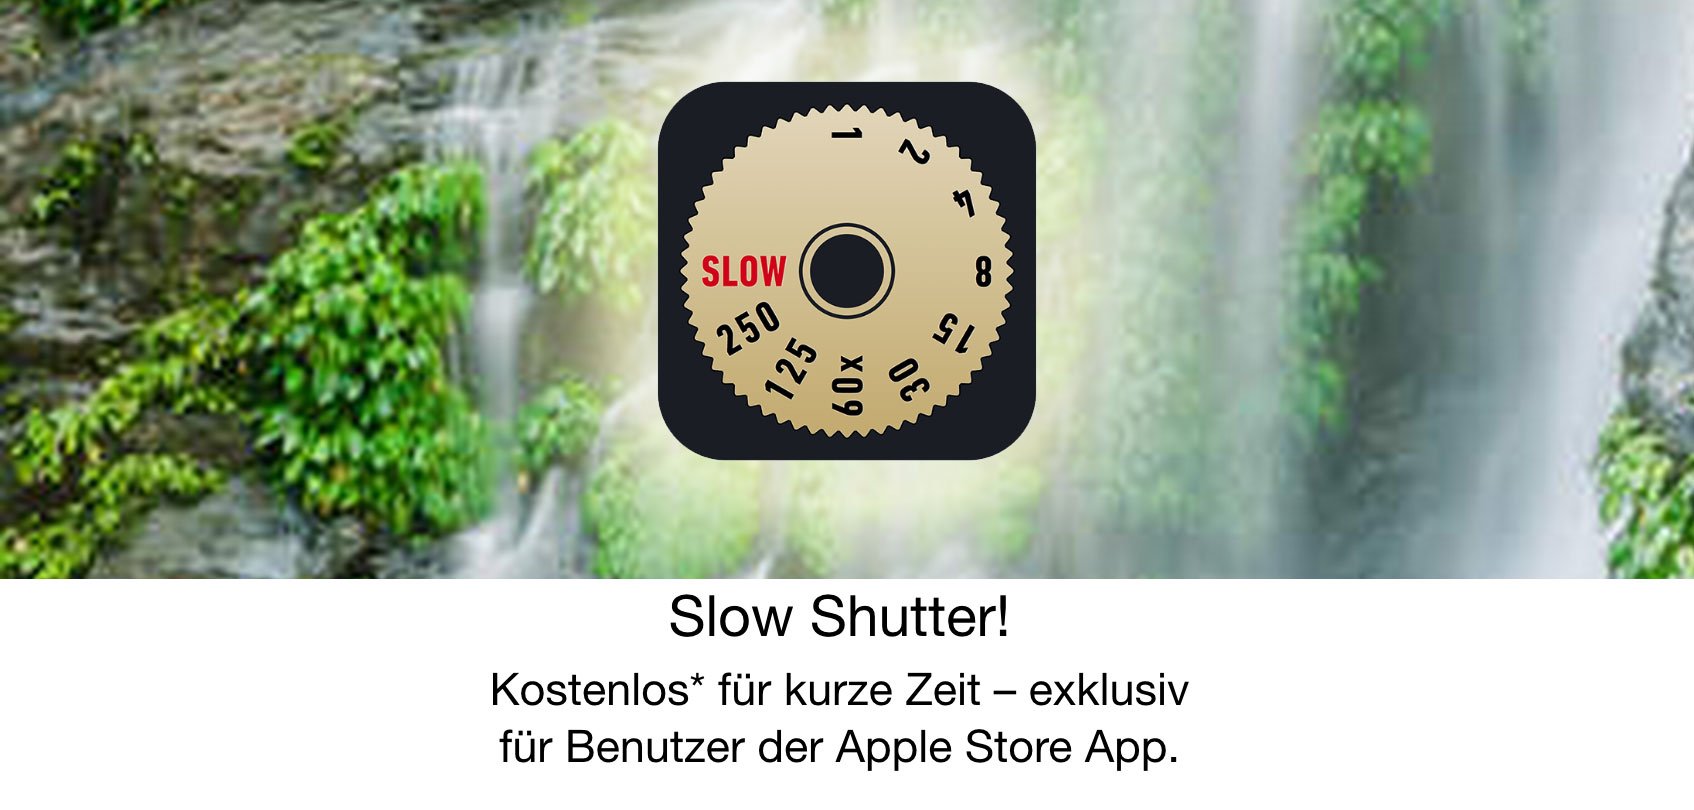 Slow Shutter! kostenlos über Apple Store App 4